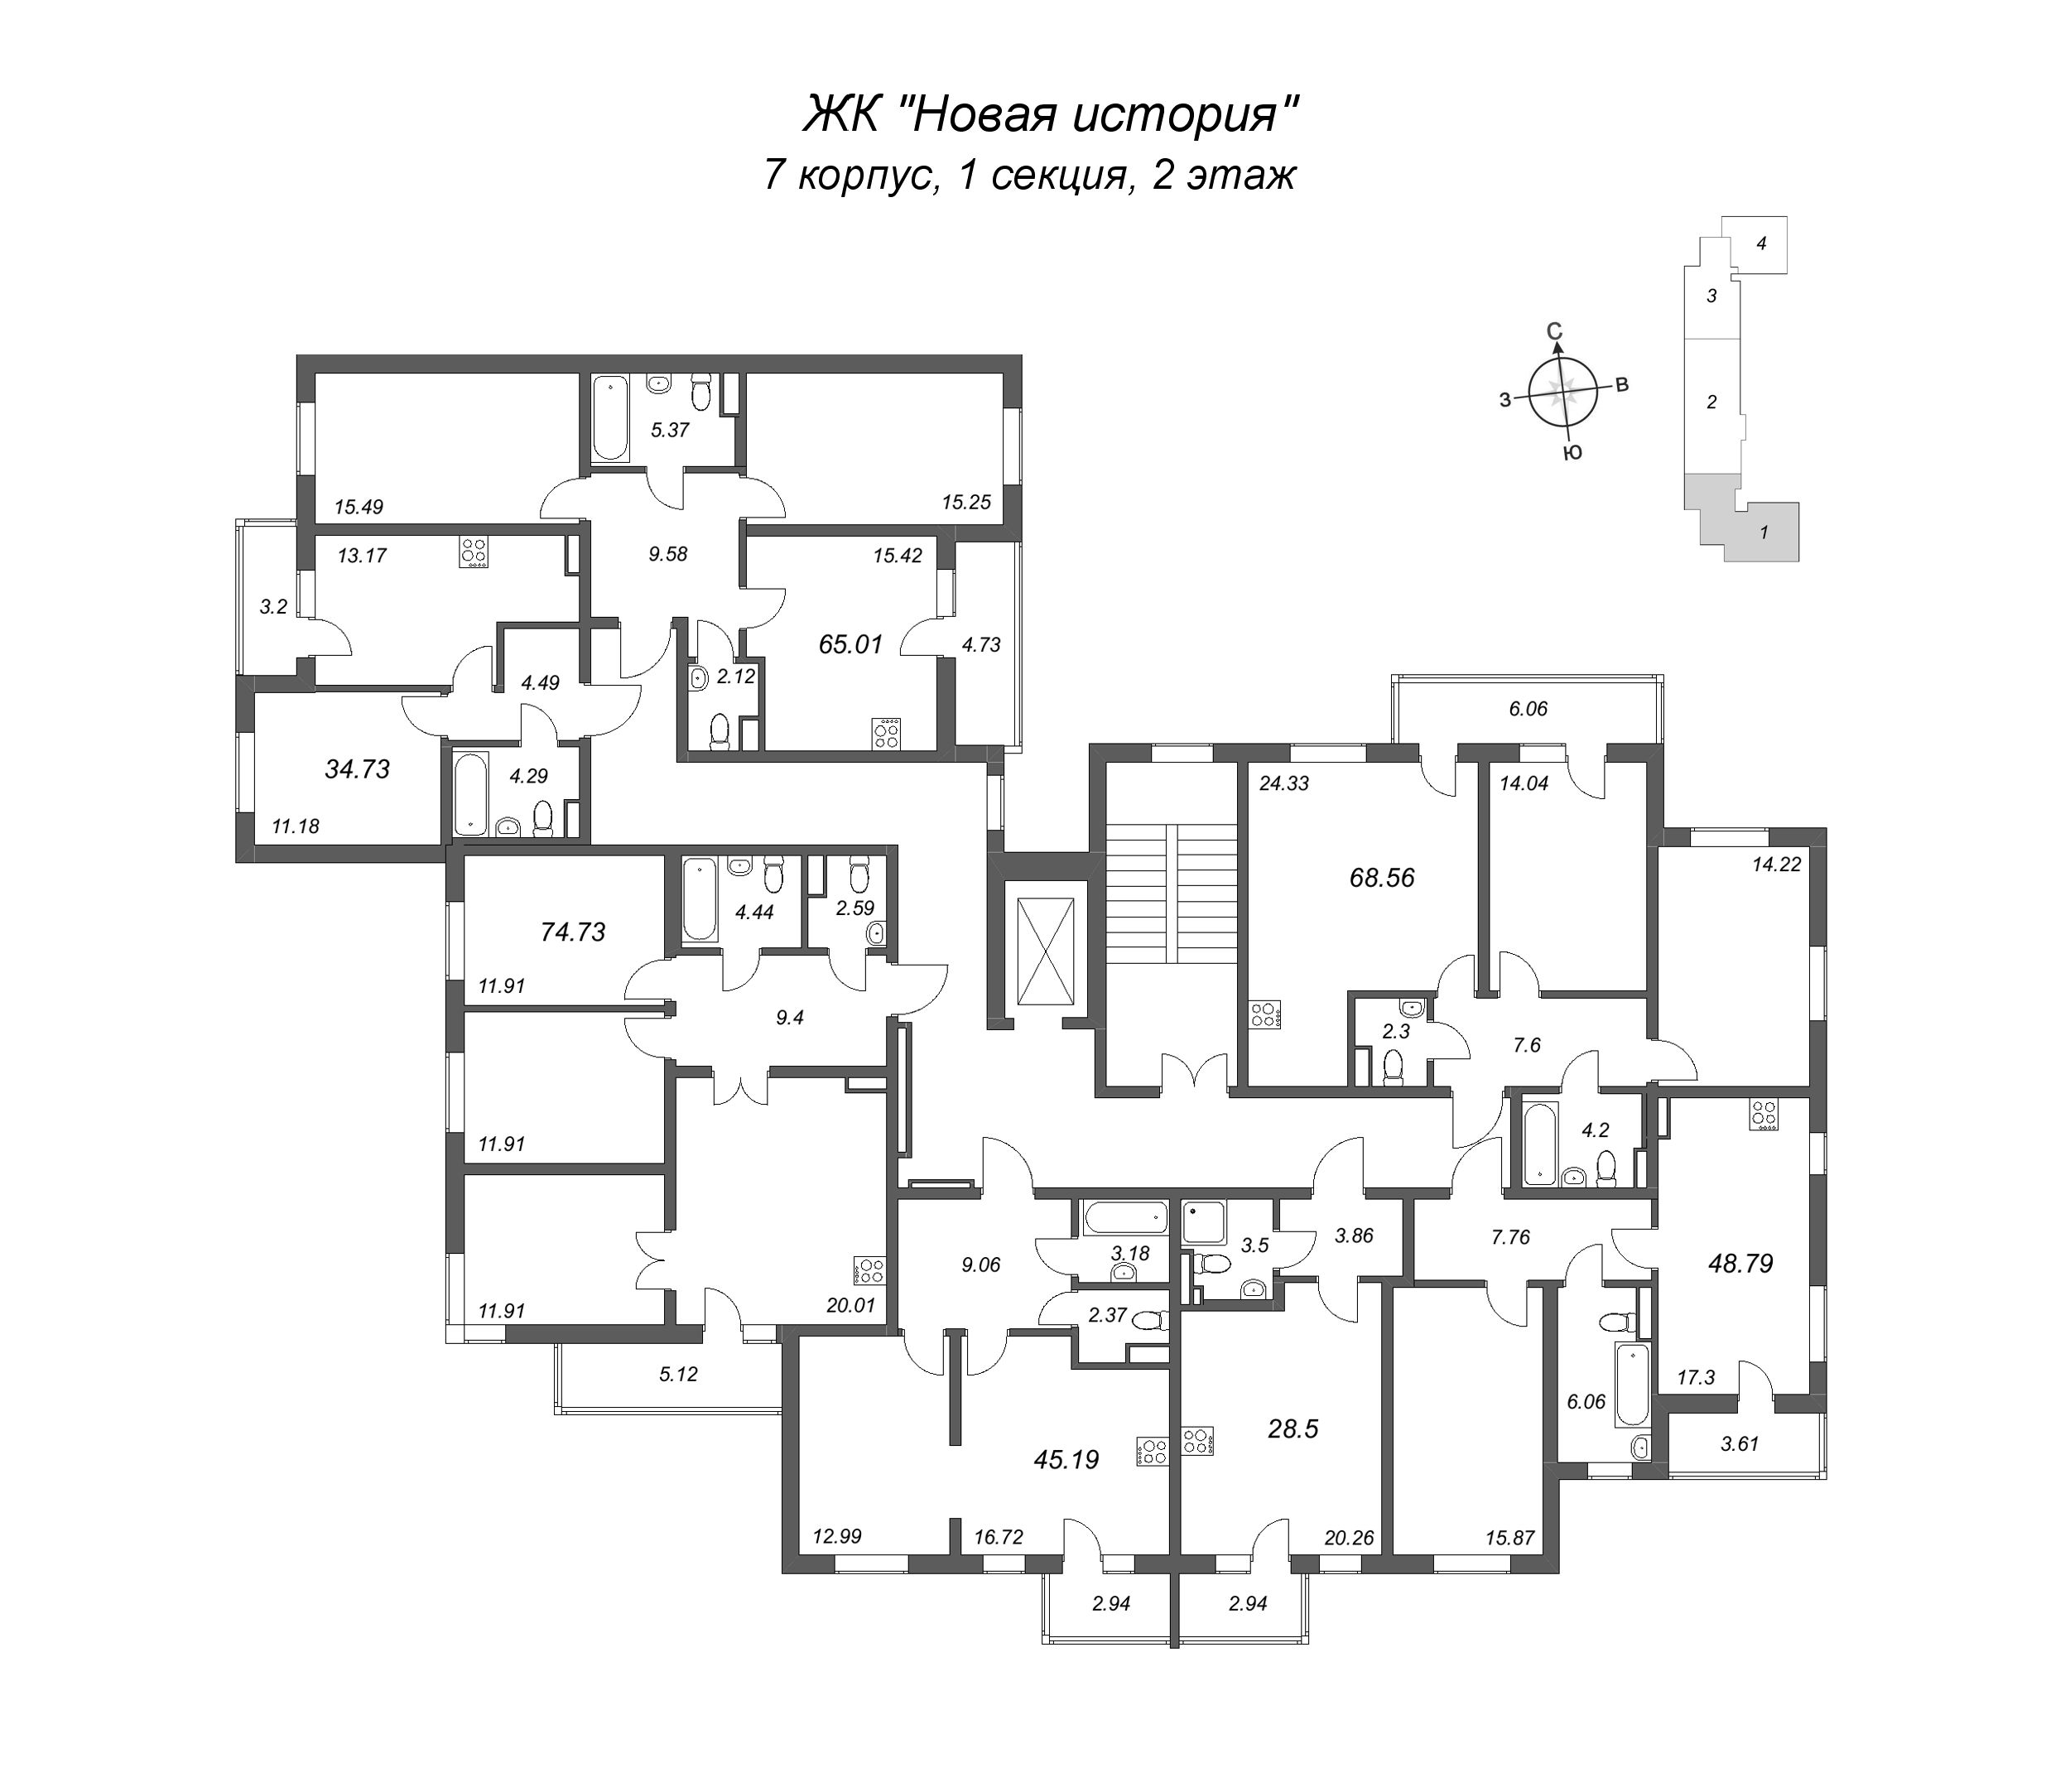 3-комнатная (Евро) квартира, 65.01 м² - планировка этажа